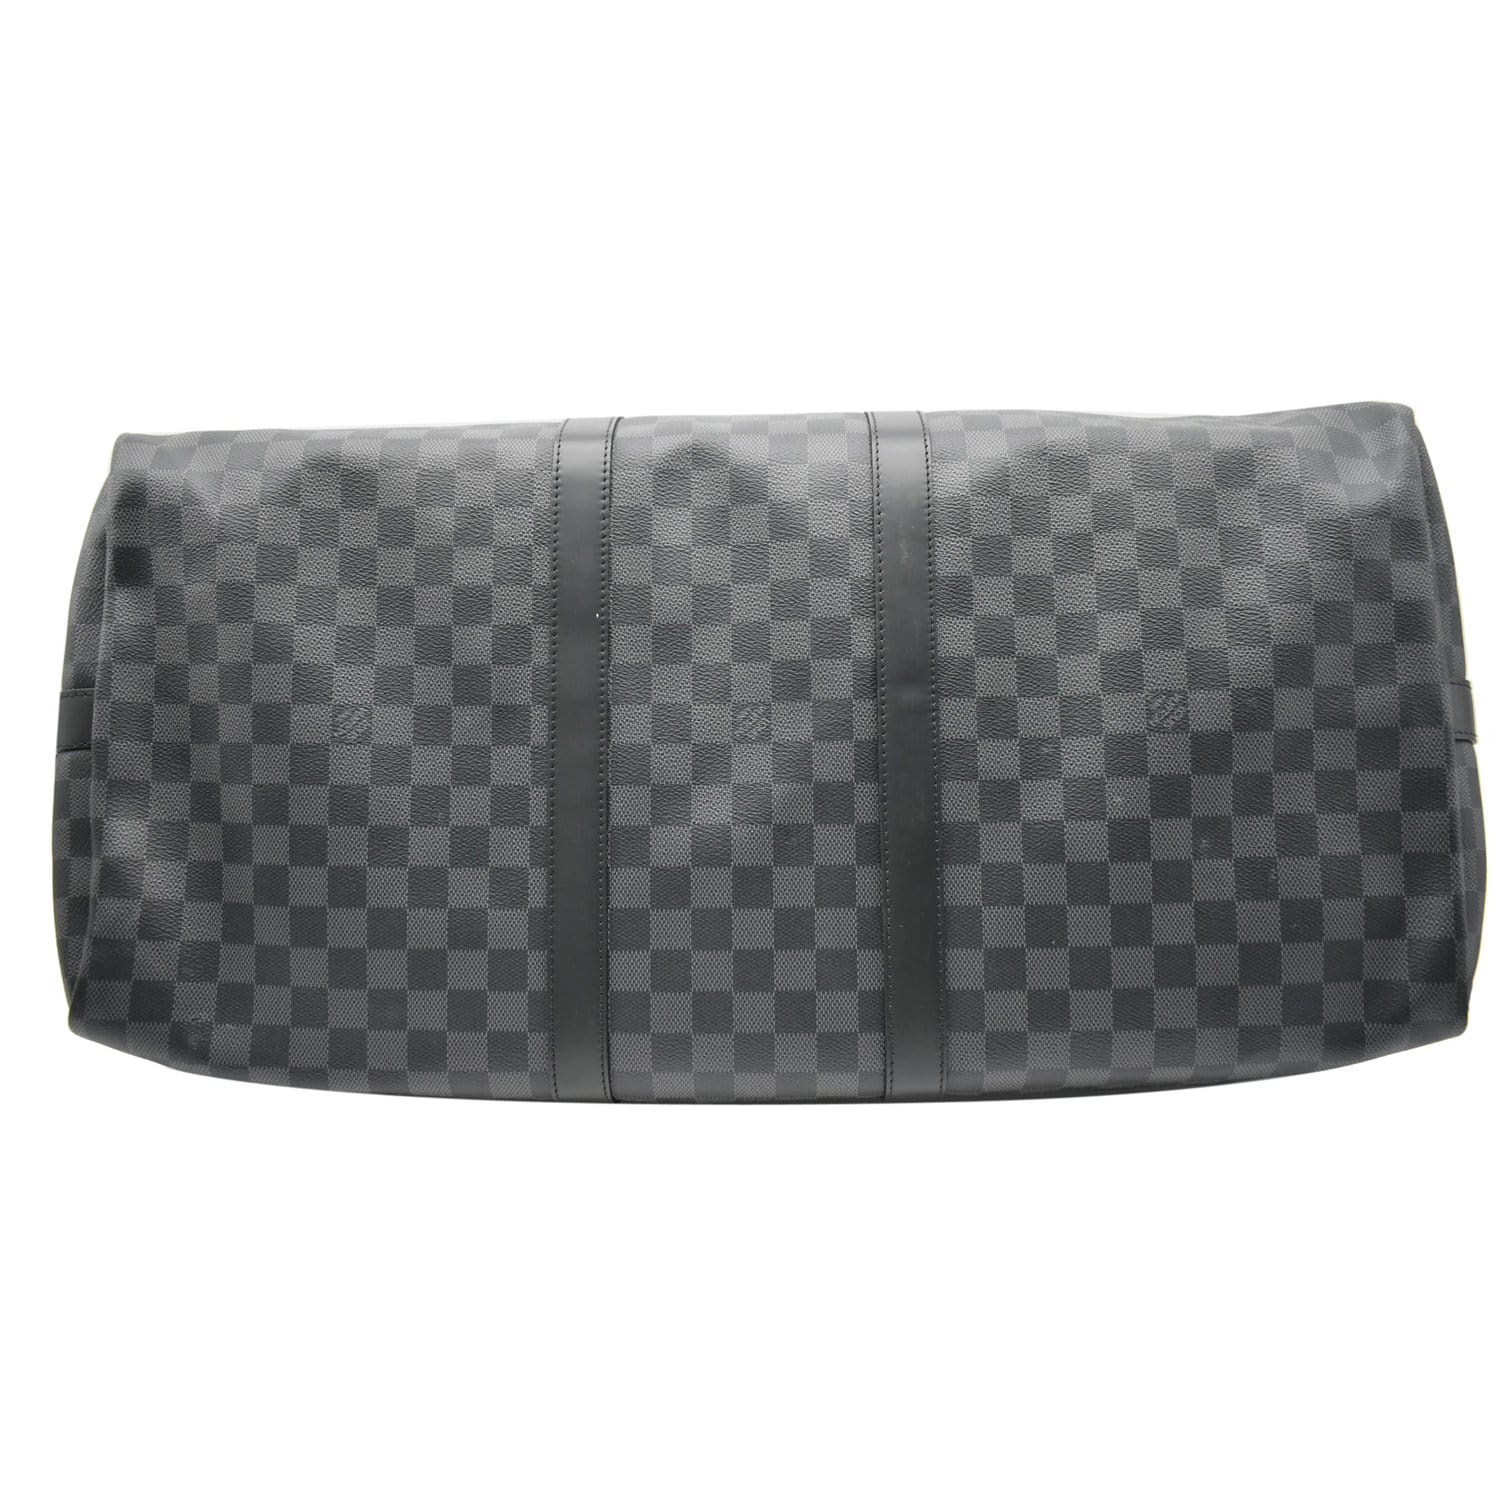 Louis Vuitton Keepall Bandouliere Damier Graphite 55 Black